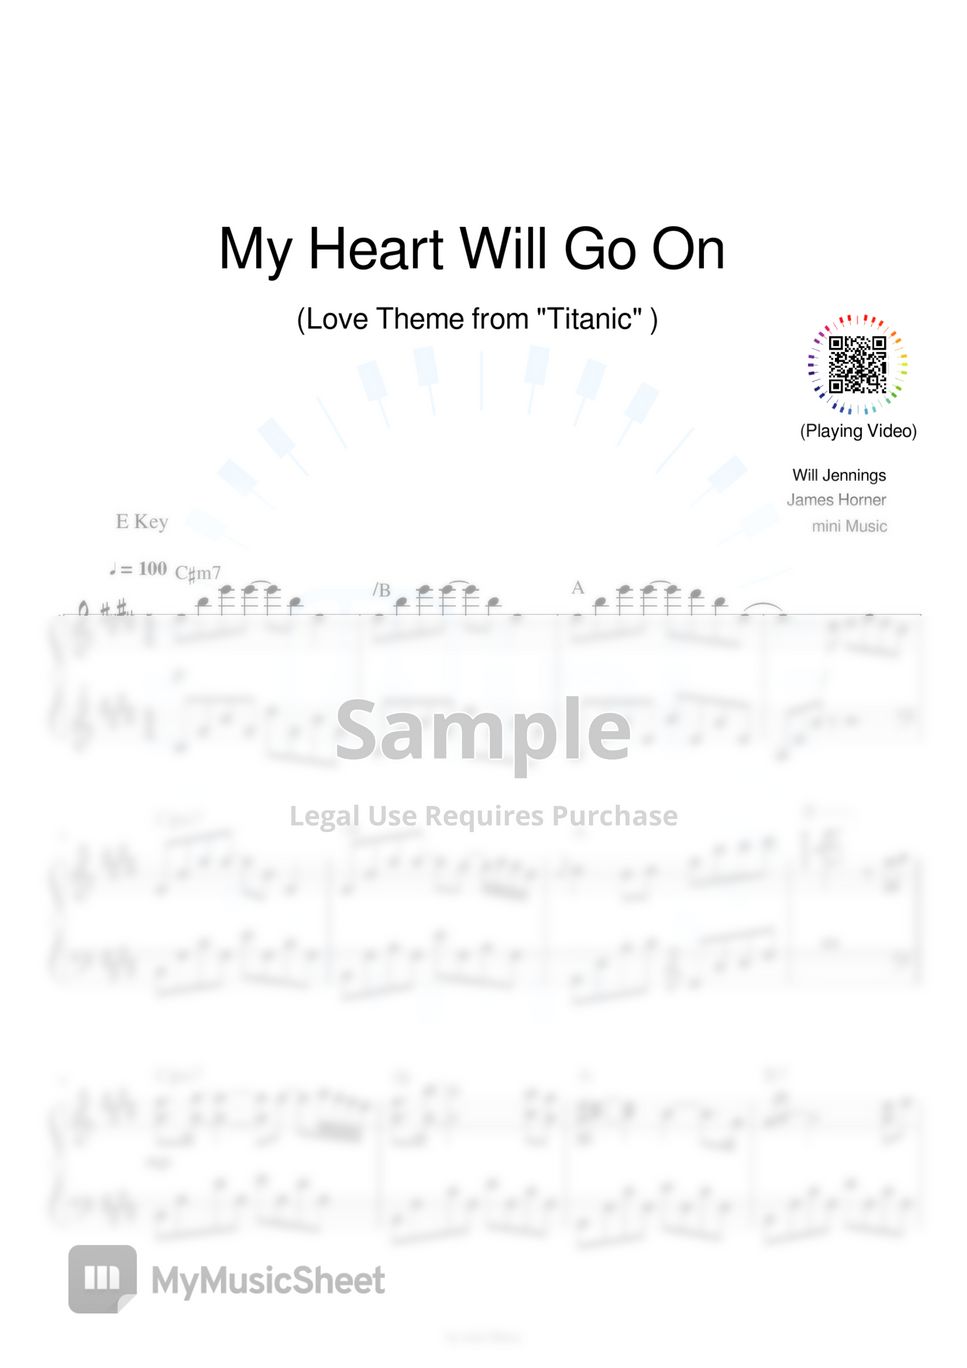 Celine Dion - My Heart Will Go On (Titanic OST) (E Key + F Key) by mini Music